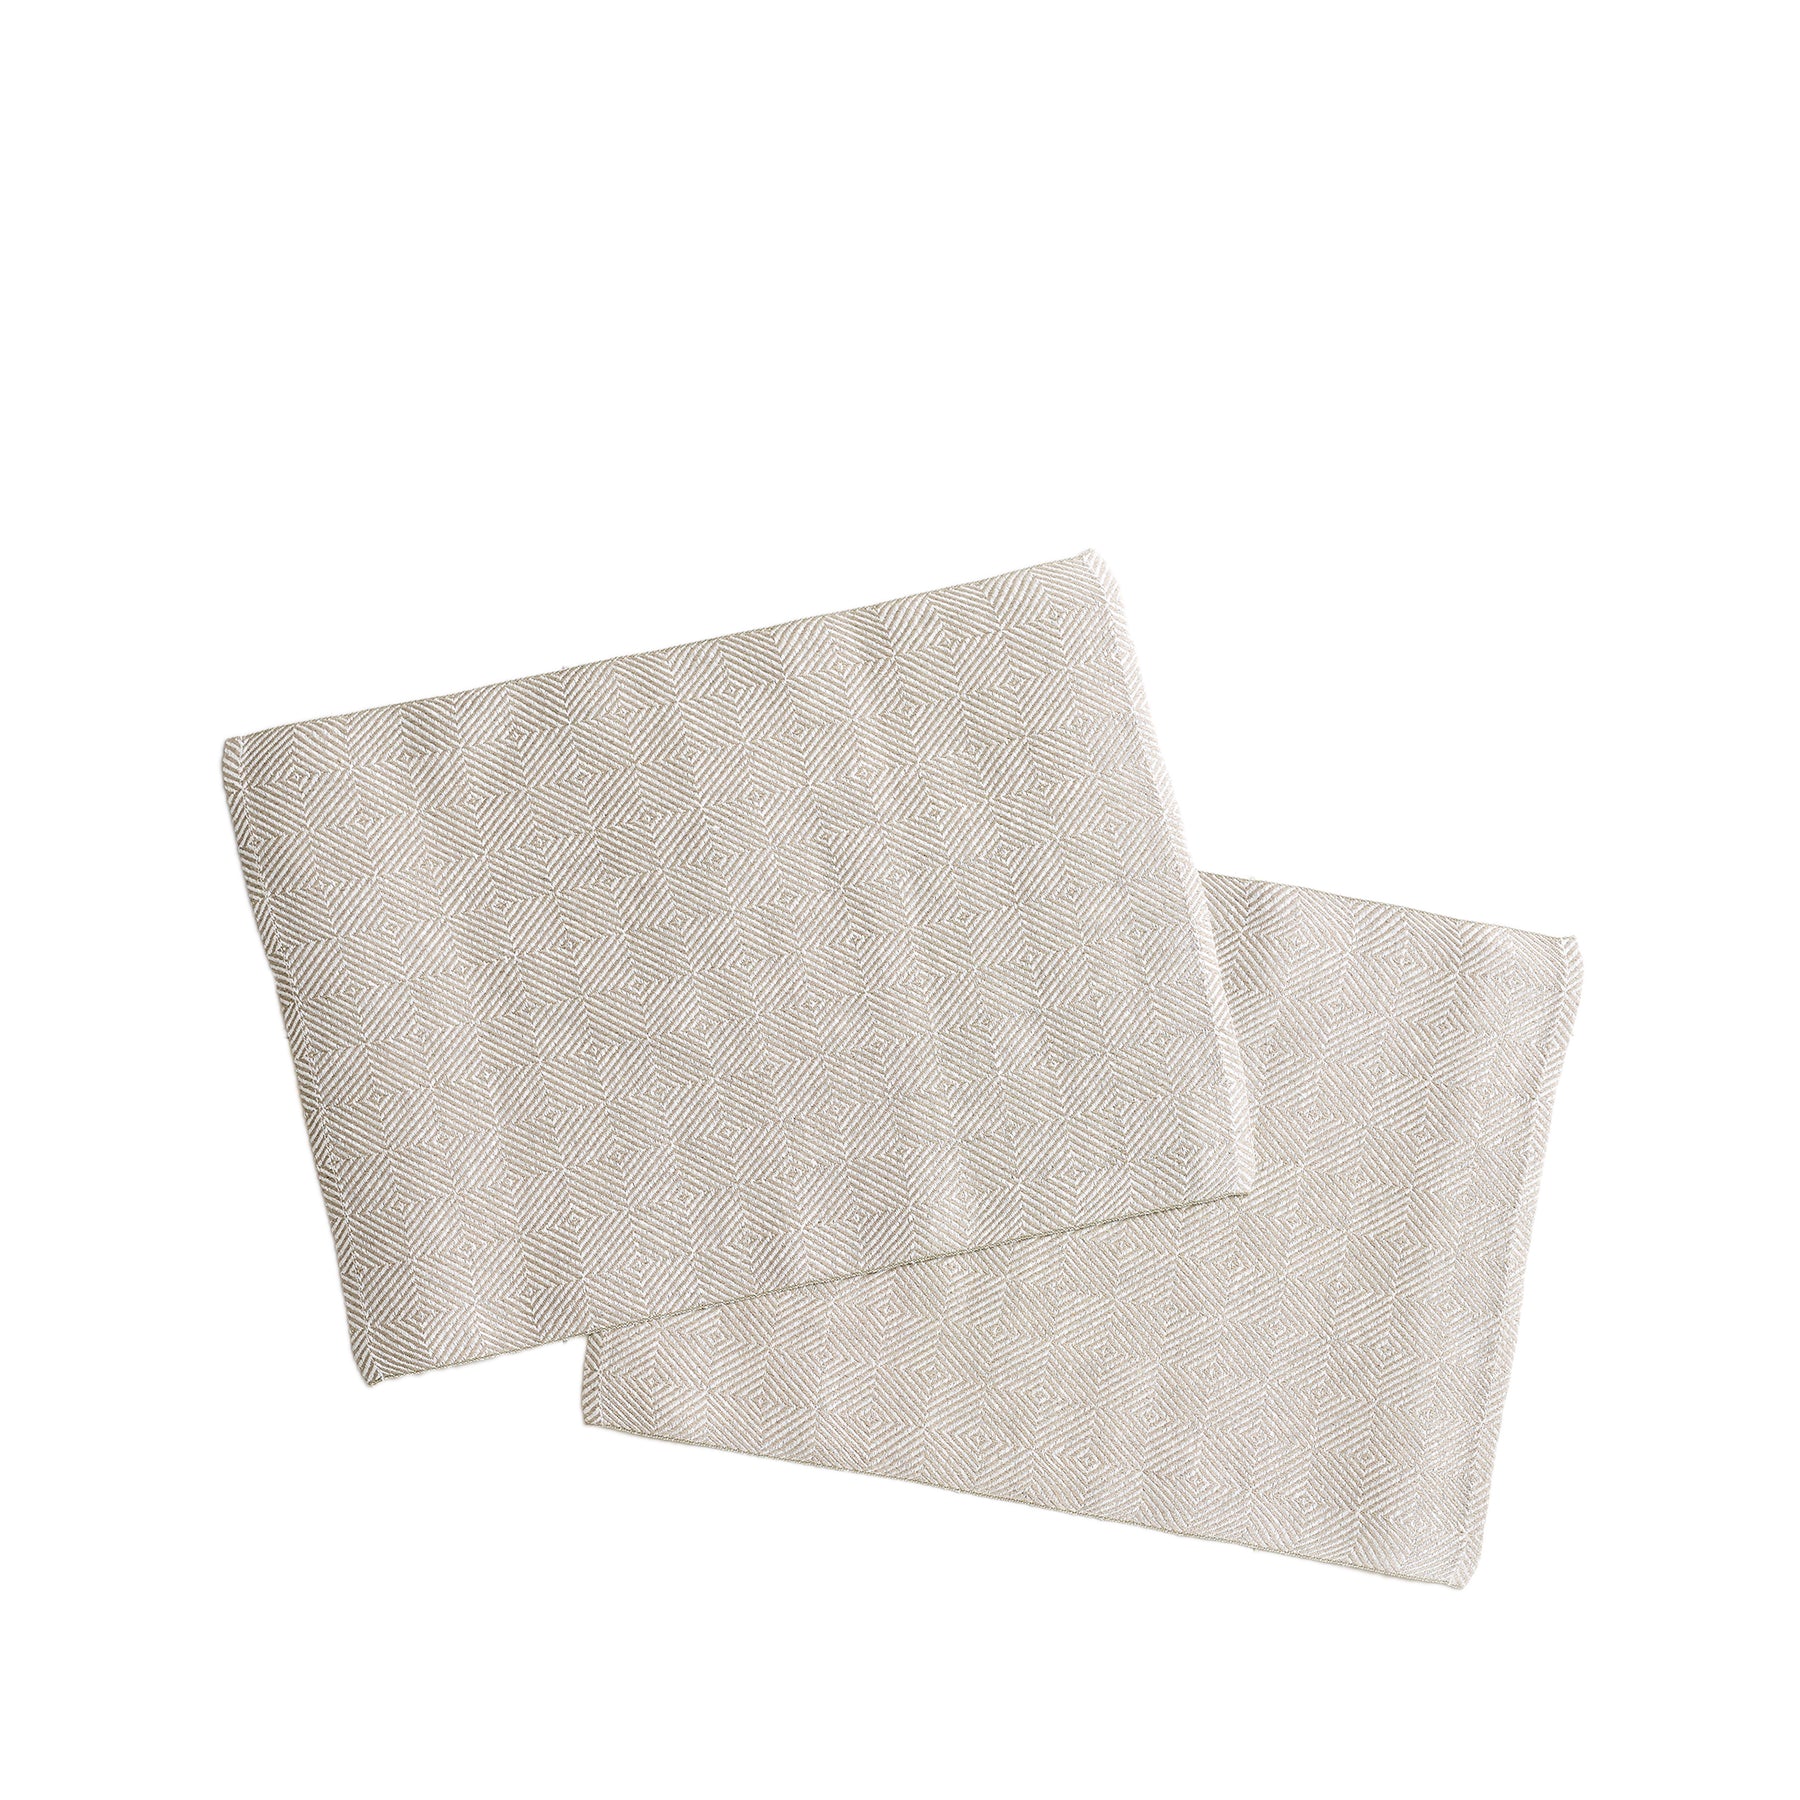 Linen Rutig Strandrag Placemats in White (Set of 2) Zoom Image 1